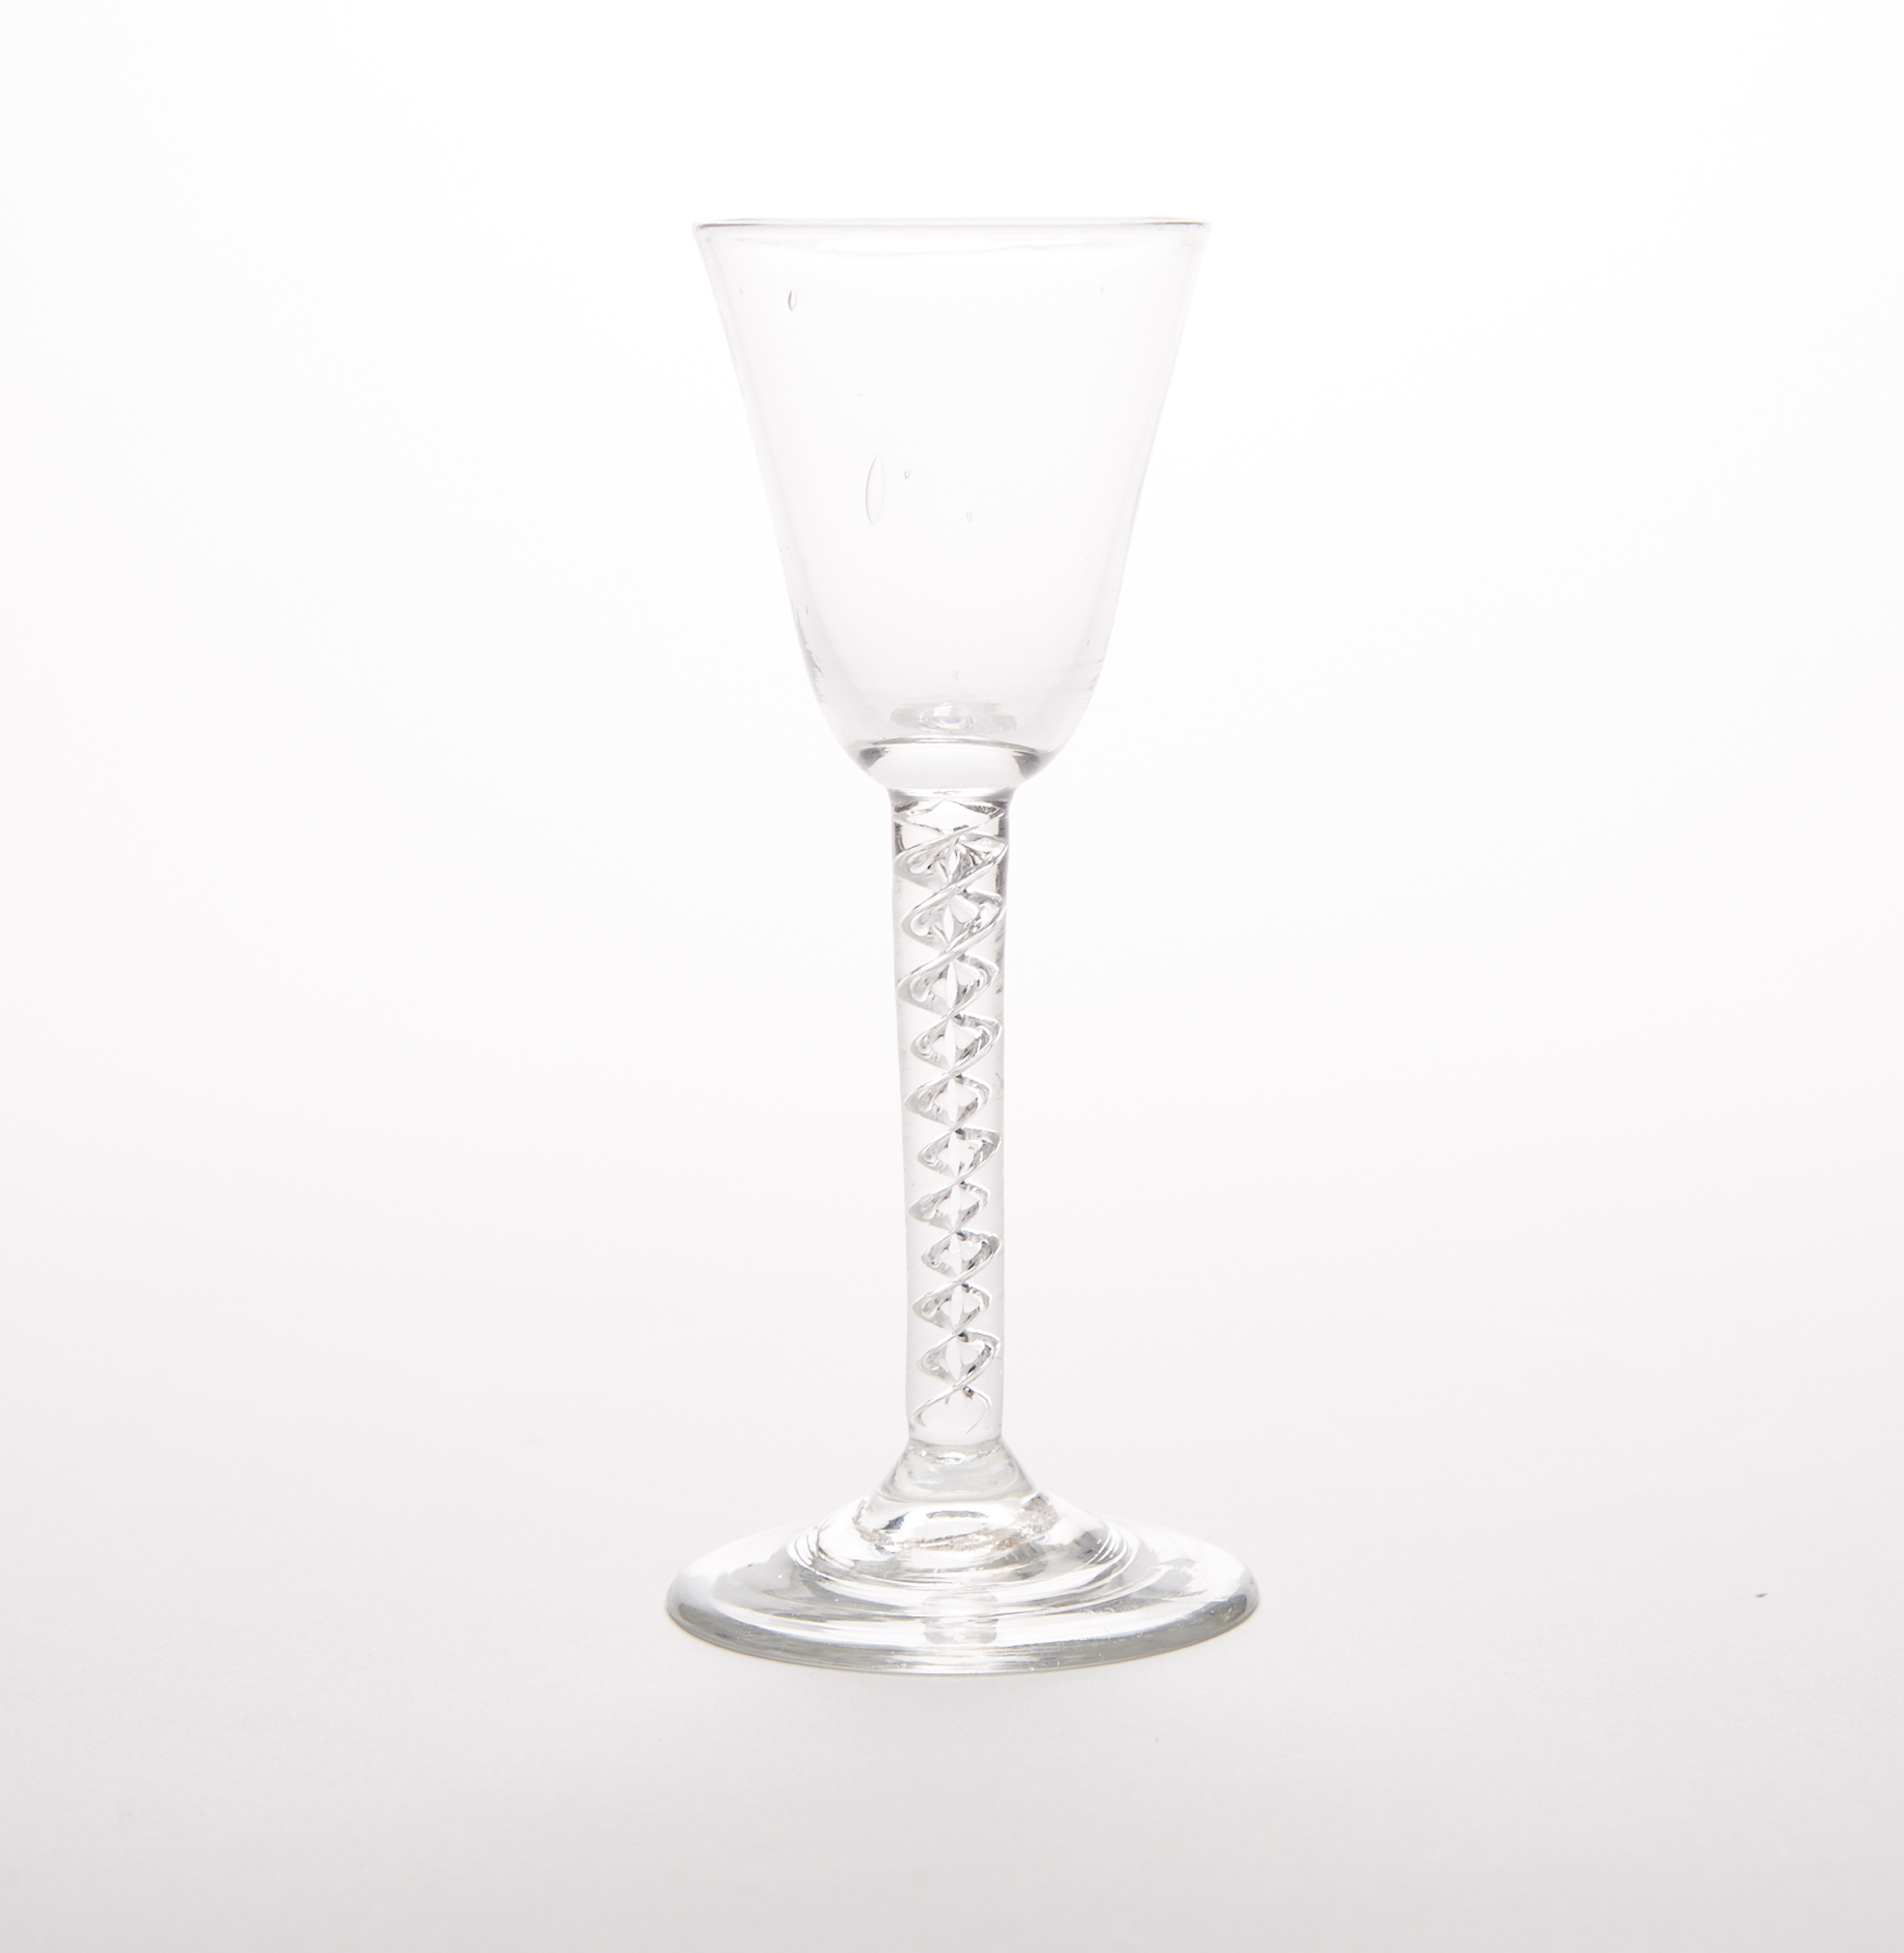 English Airtwist Stemmed Wine Glass, mid-18th century